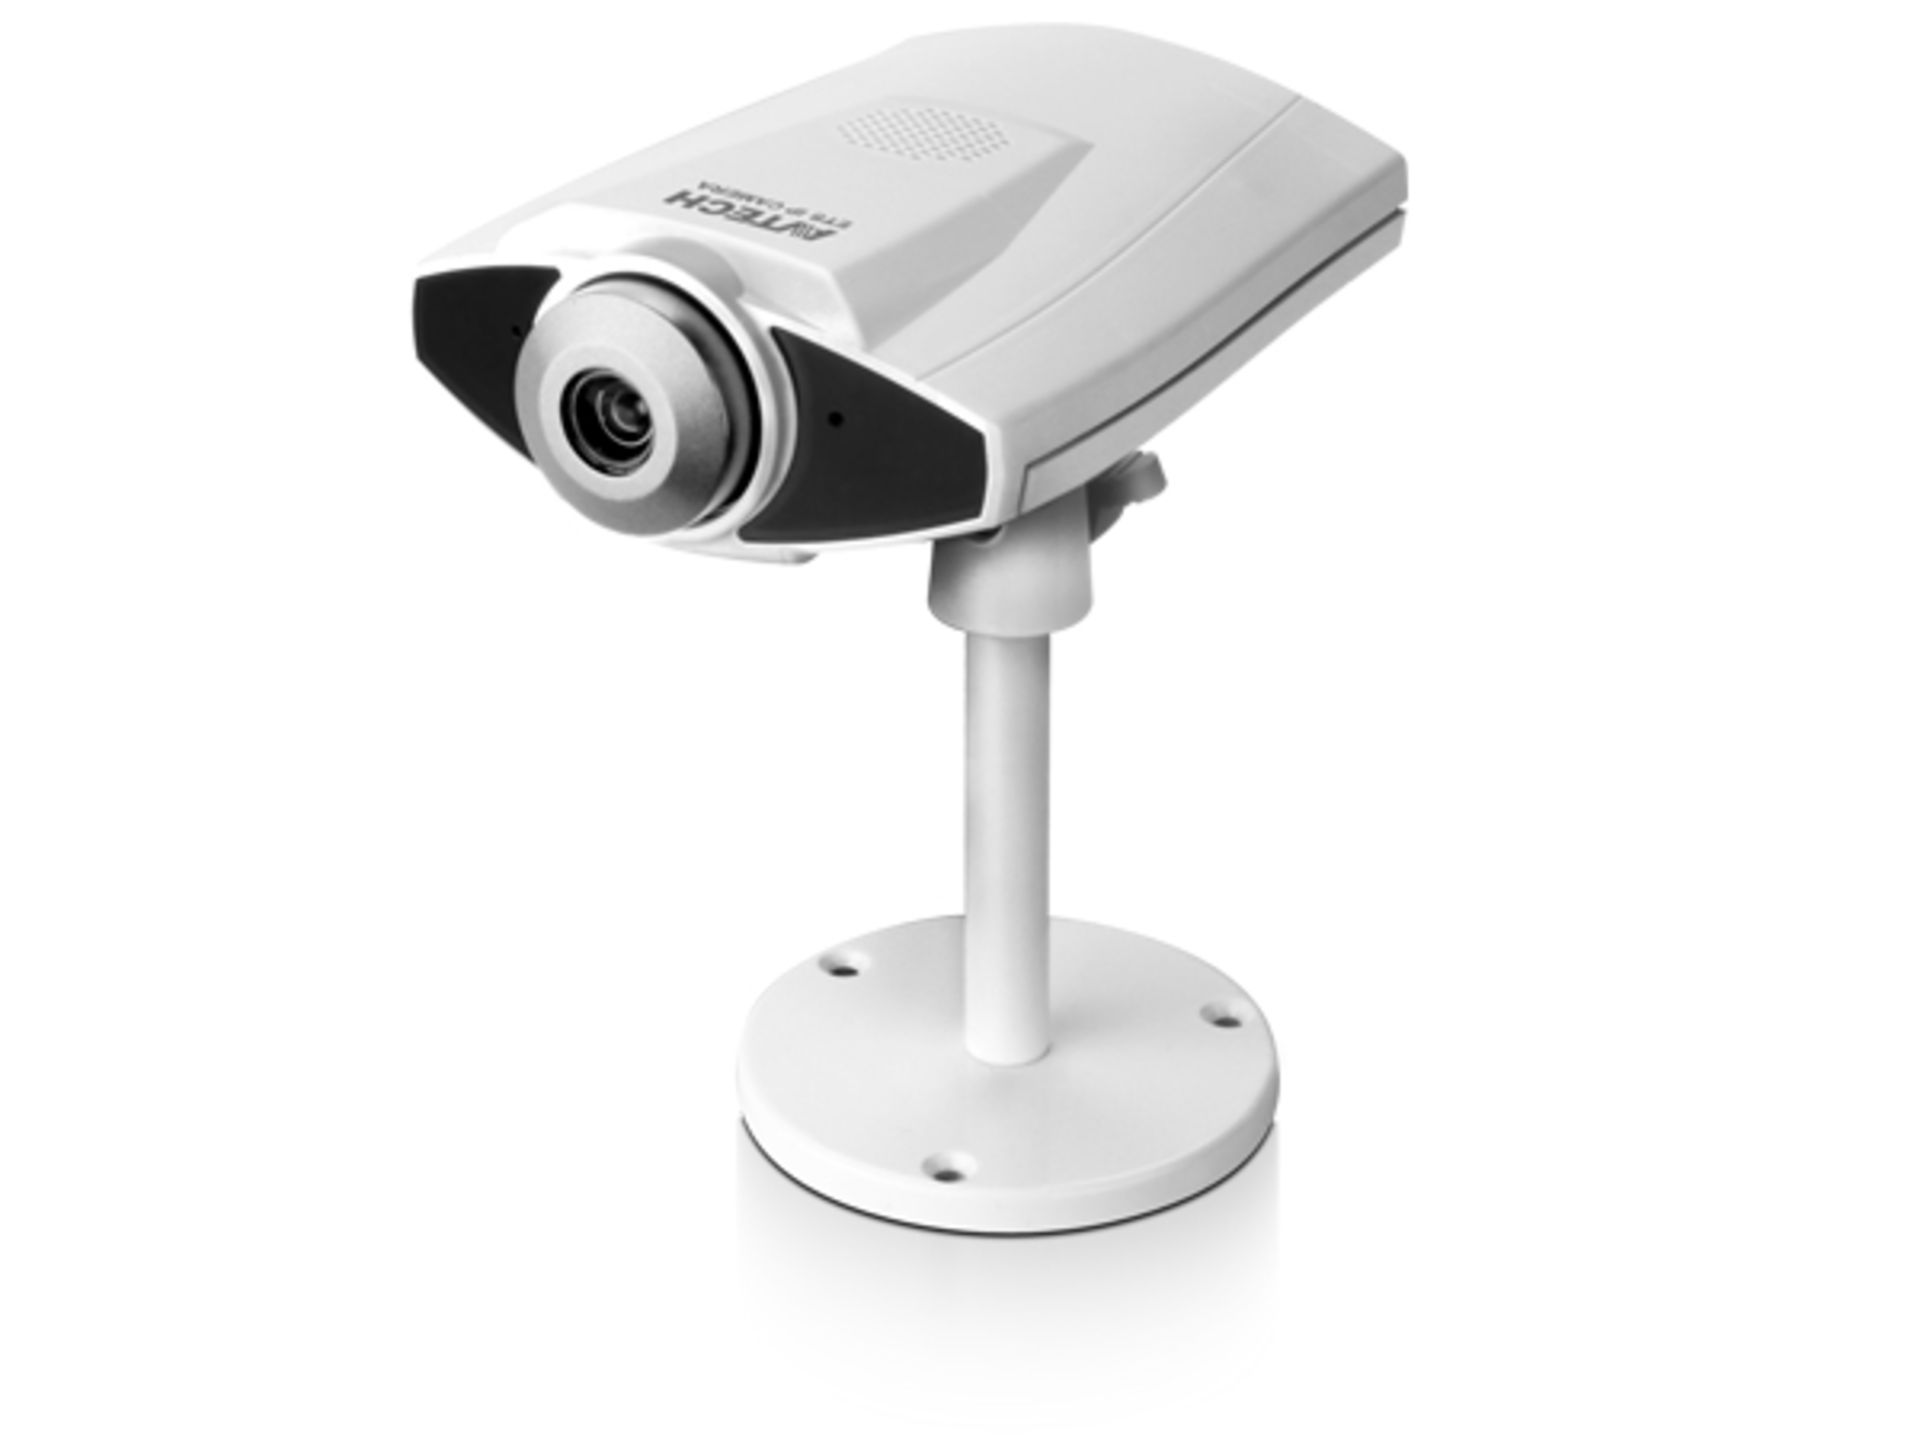 V Brand New Avtech IR Box IP Camera -10m night vision- 2 Way Audio X 2 YOUR BID PRICE TO BE